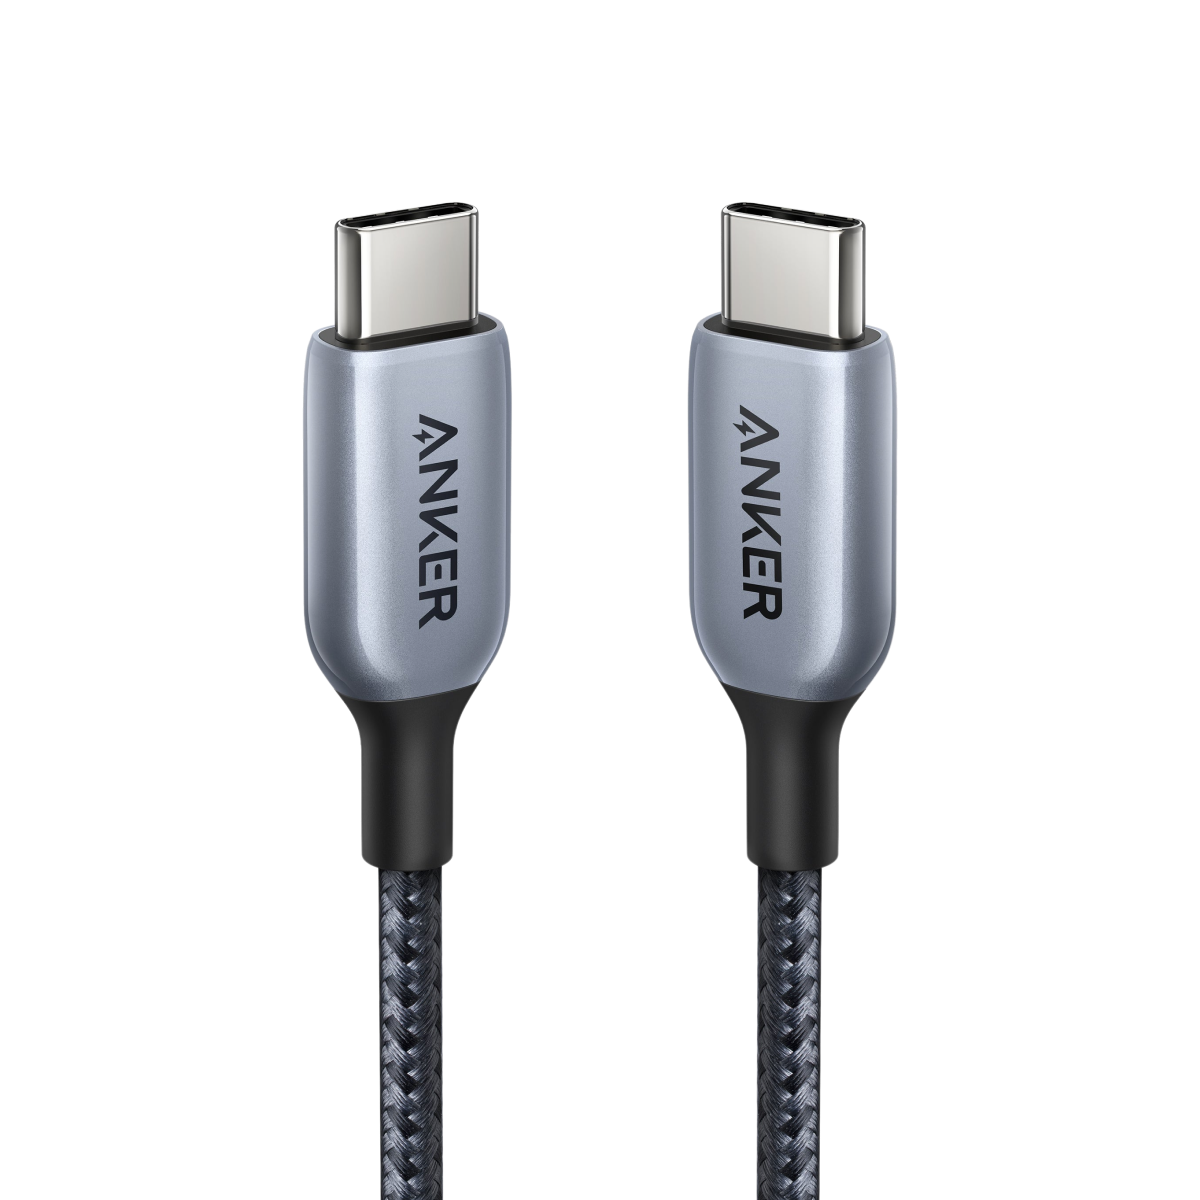 Krage Whitney national flag Anker 765 USB-C to USB-C Cable (140W Nylon) - Anker US